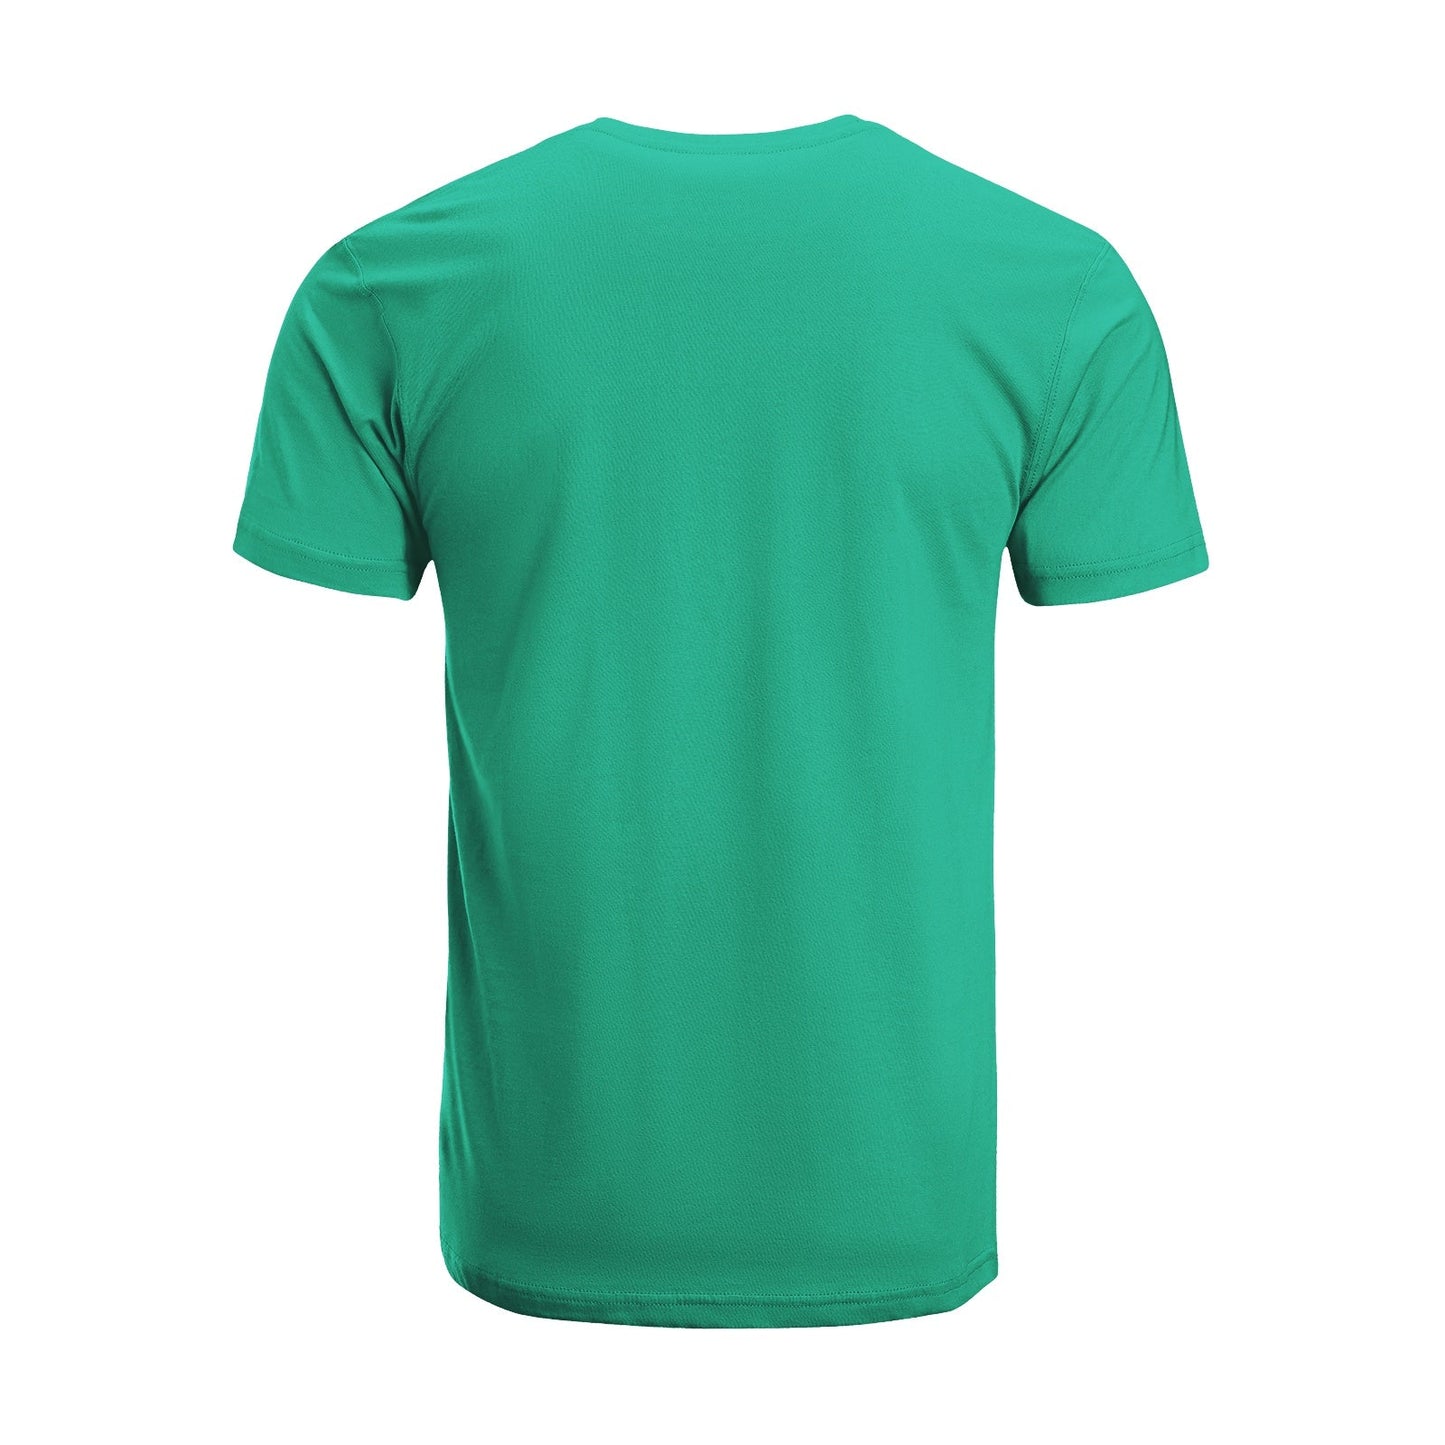 Unisex Short Sleeve Crew Neck Cotton Jersey T-Shirt VEGAN 25